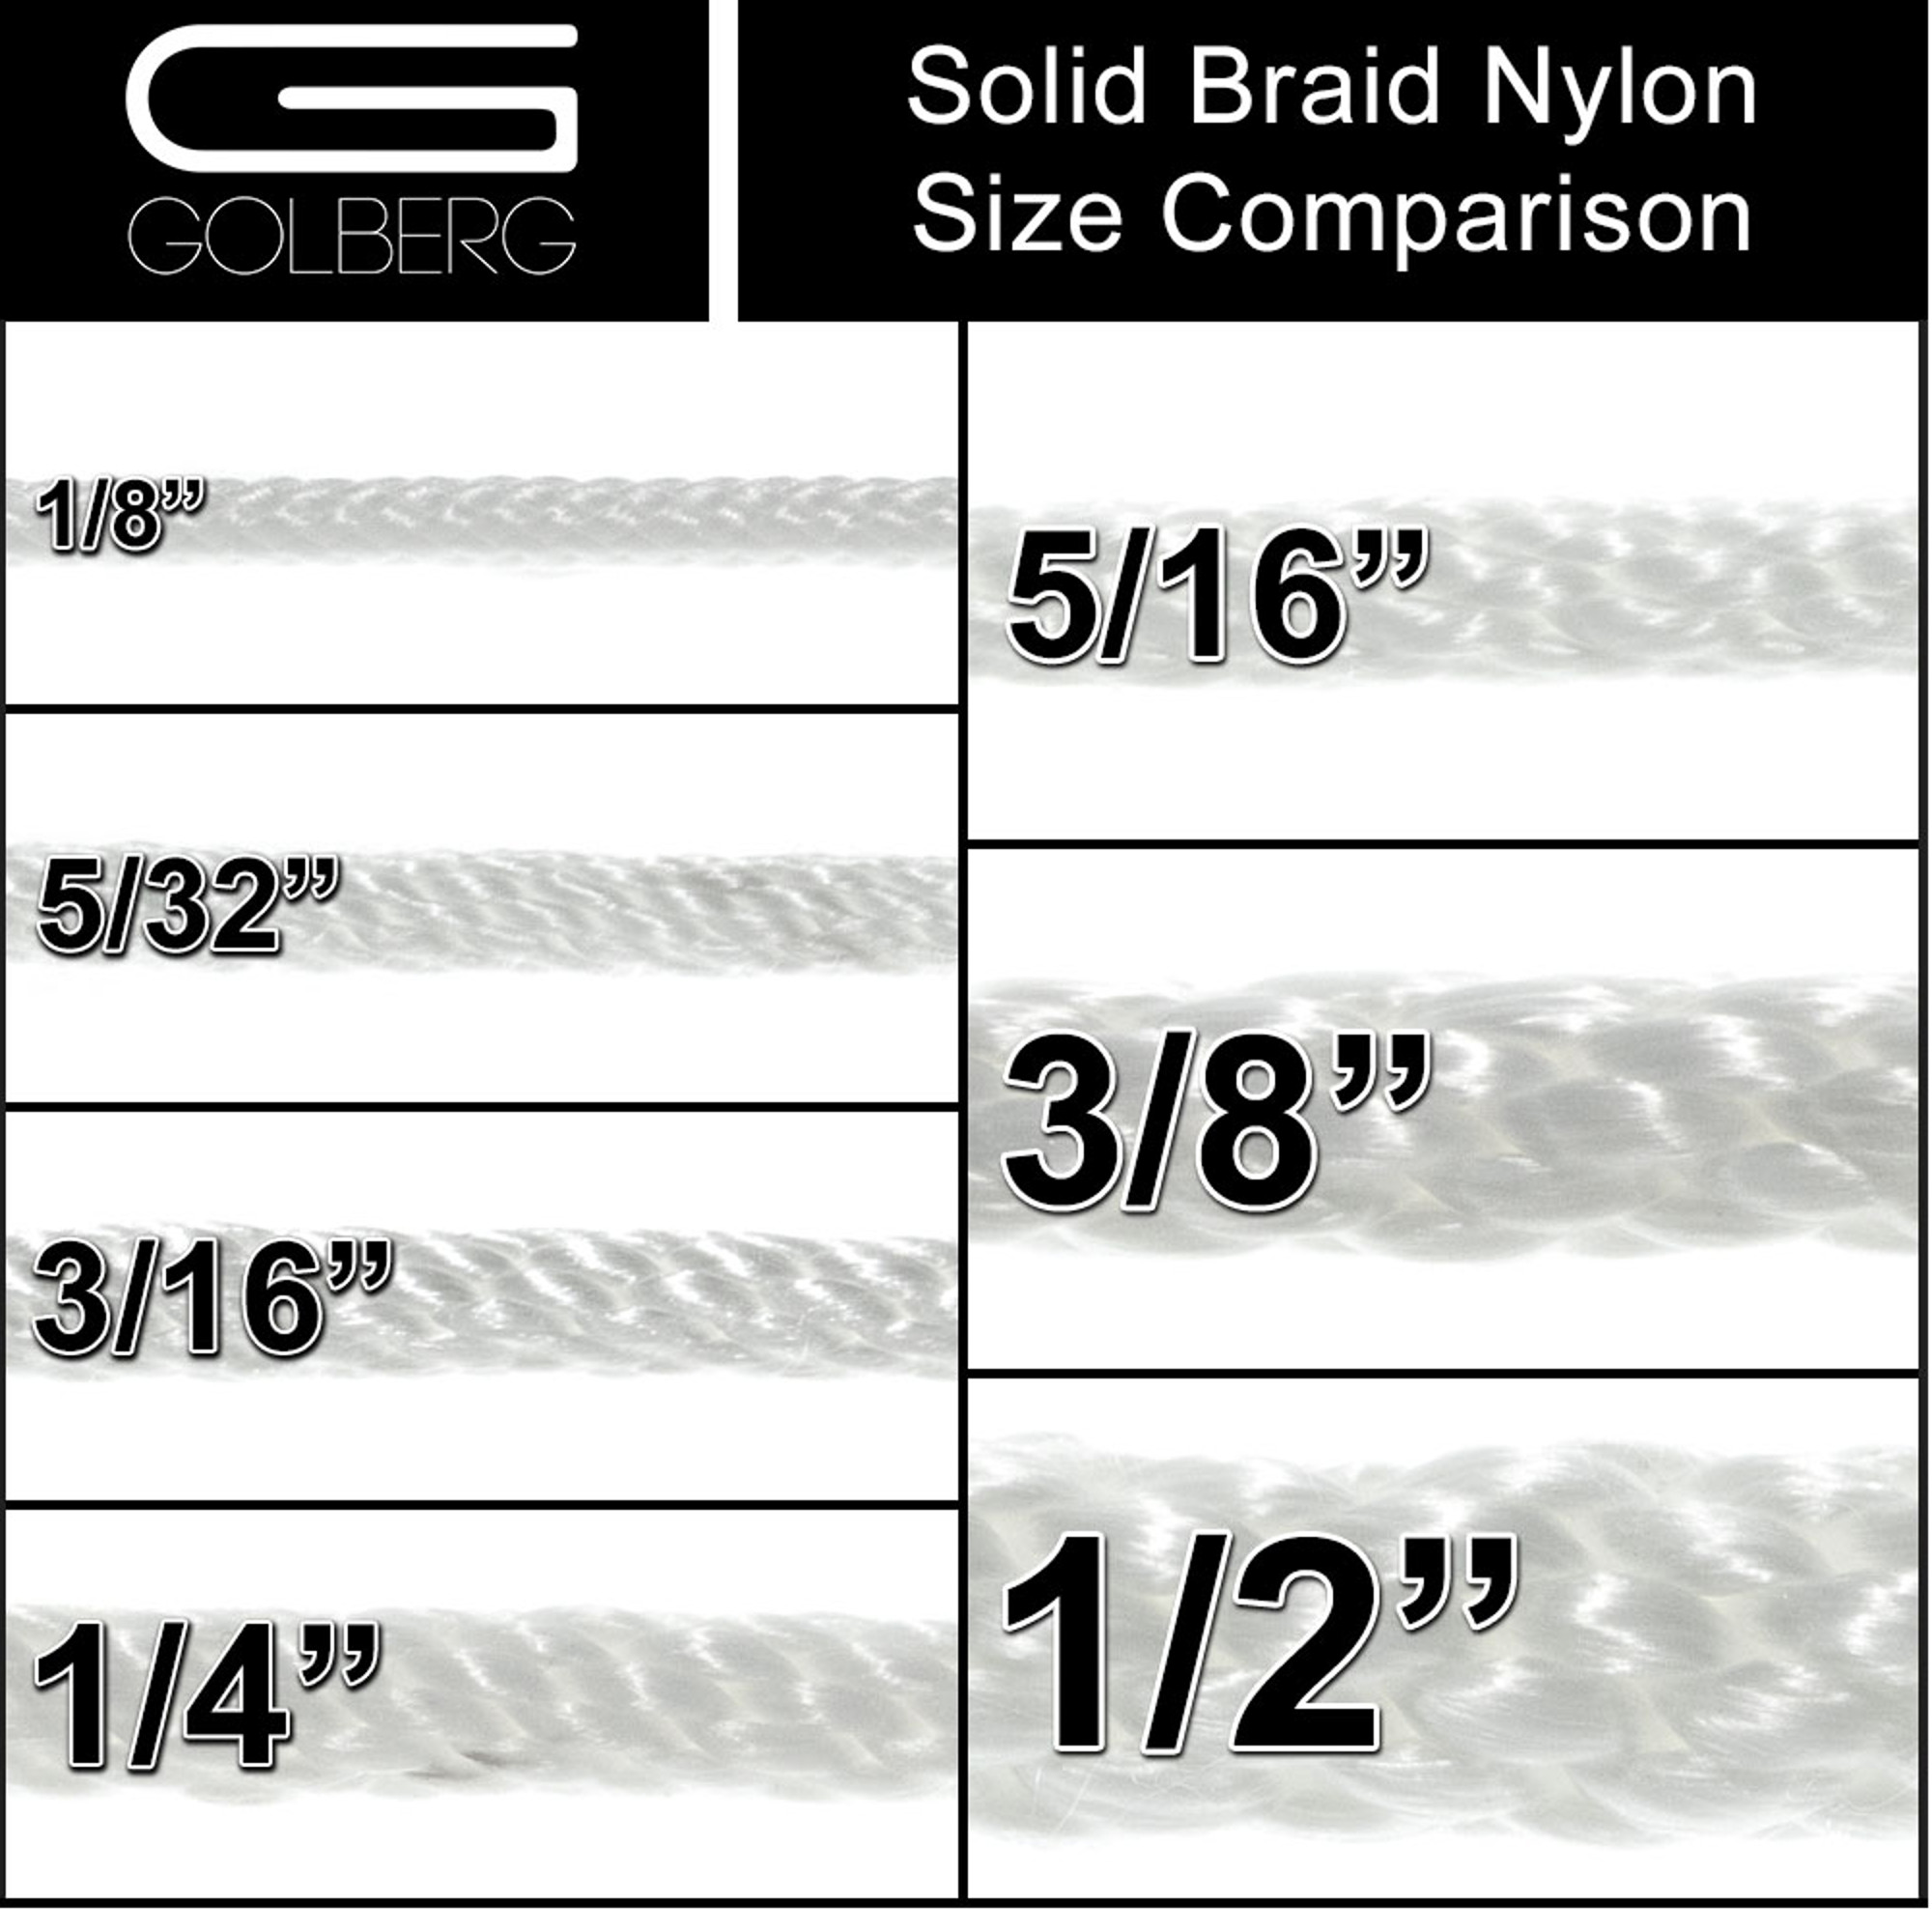 Golberg Solid Braid Black or White Nylon Rope 1/8-inch, 3/16-inch, 1/4-inch, 5/16-inch, 3/8-inch, 1/2-inch - Various Lengths - image 3 of 4